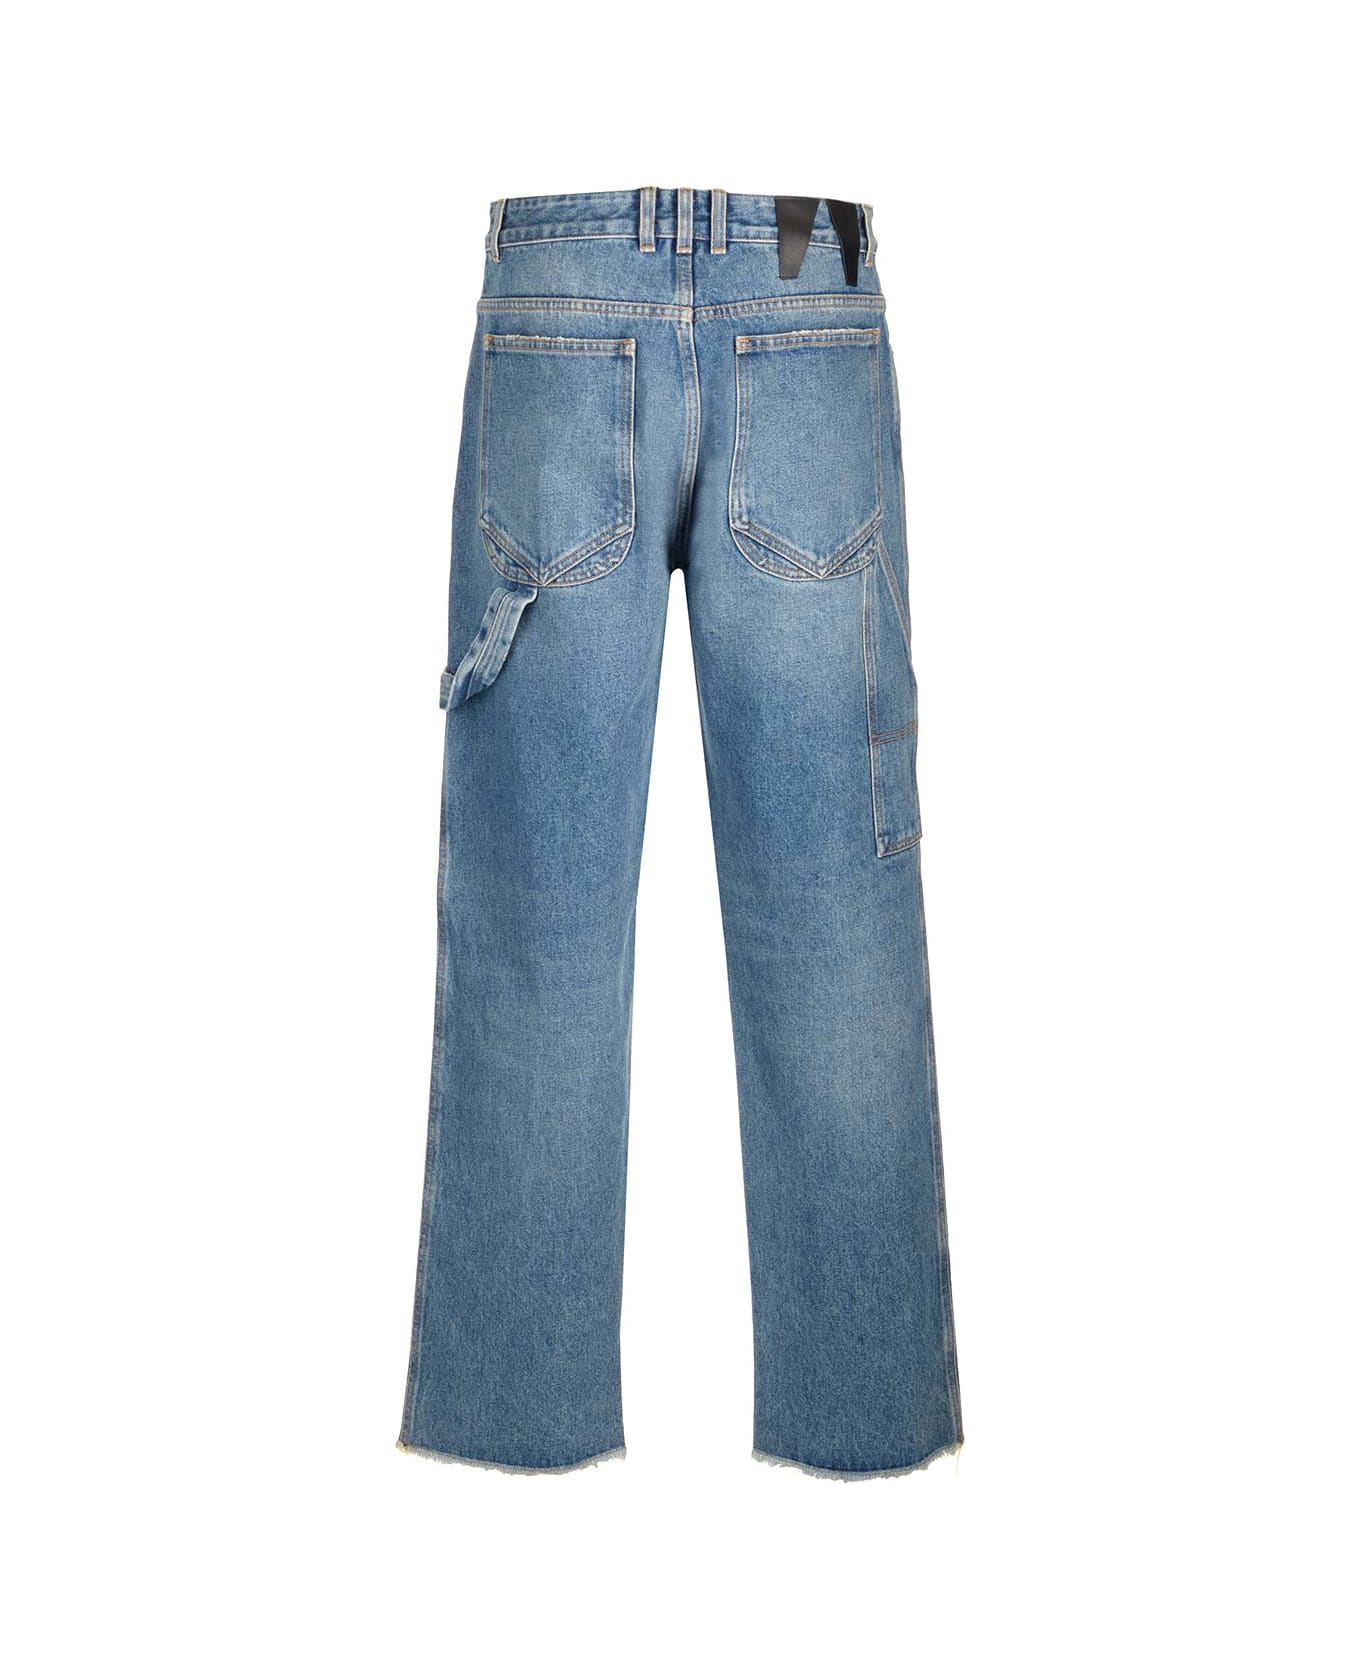 DARKPARK 'john' Carpenter Jeans - Medium Wash デニム